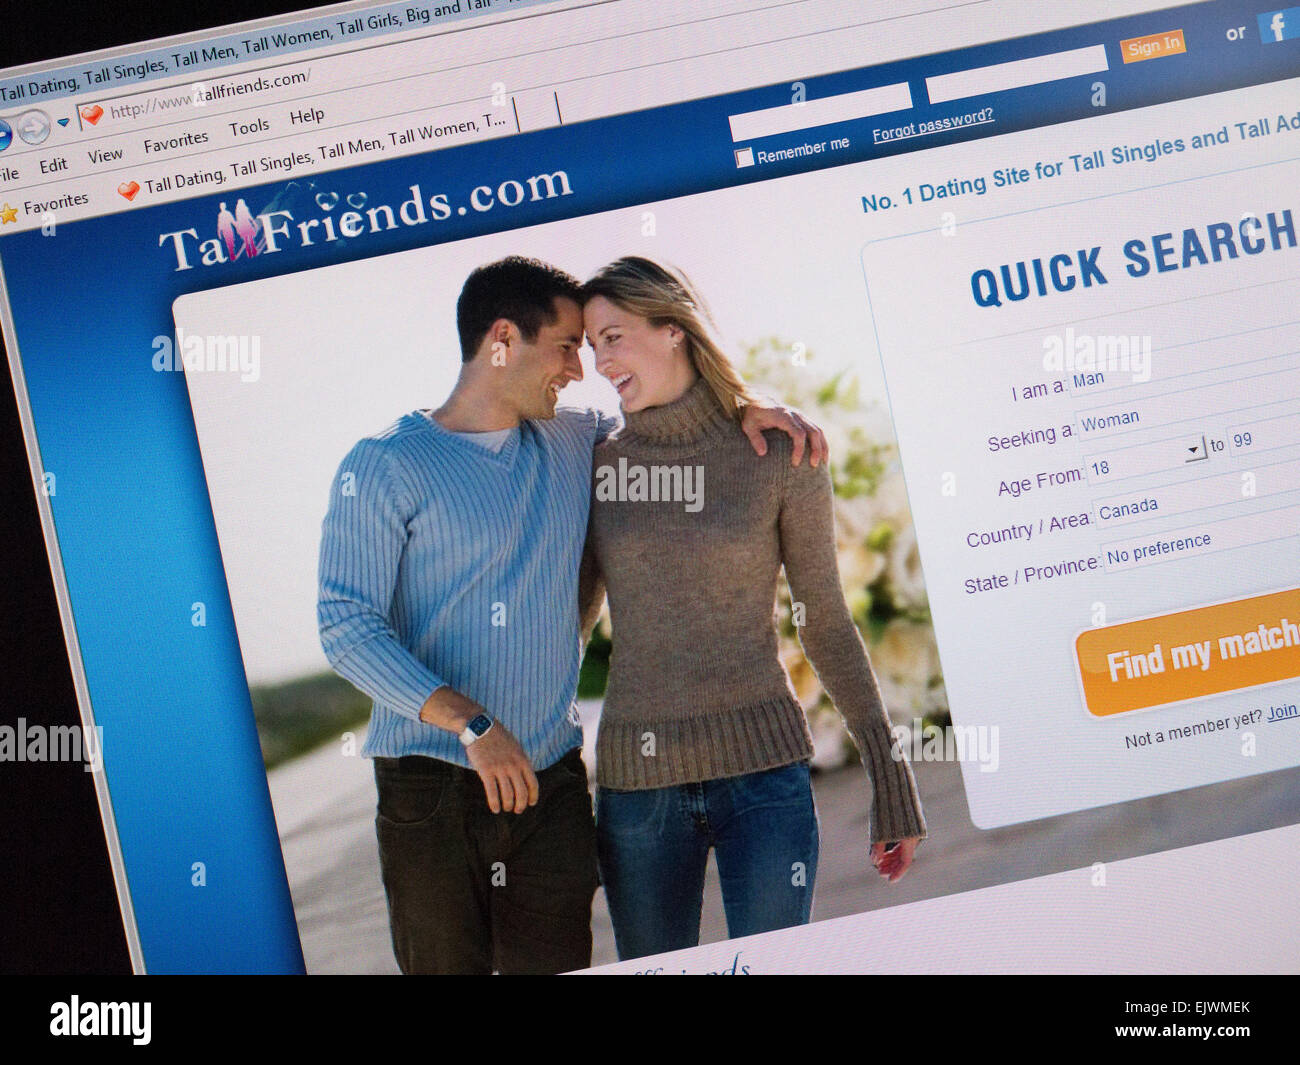 thefriends online social dating website Stock Photo